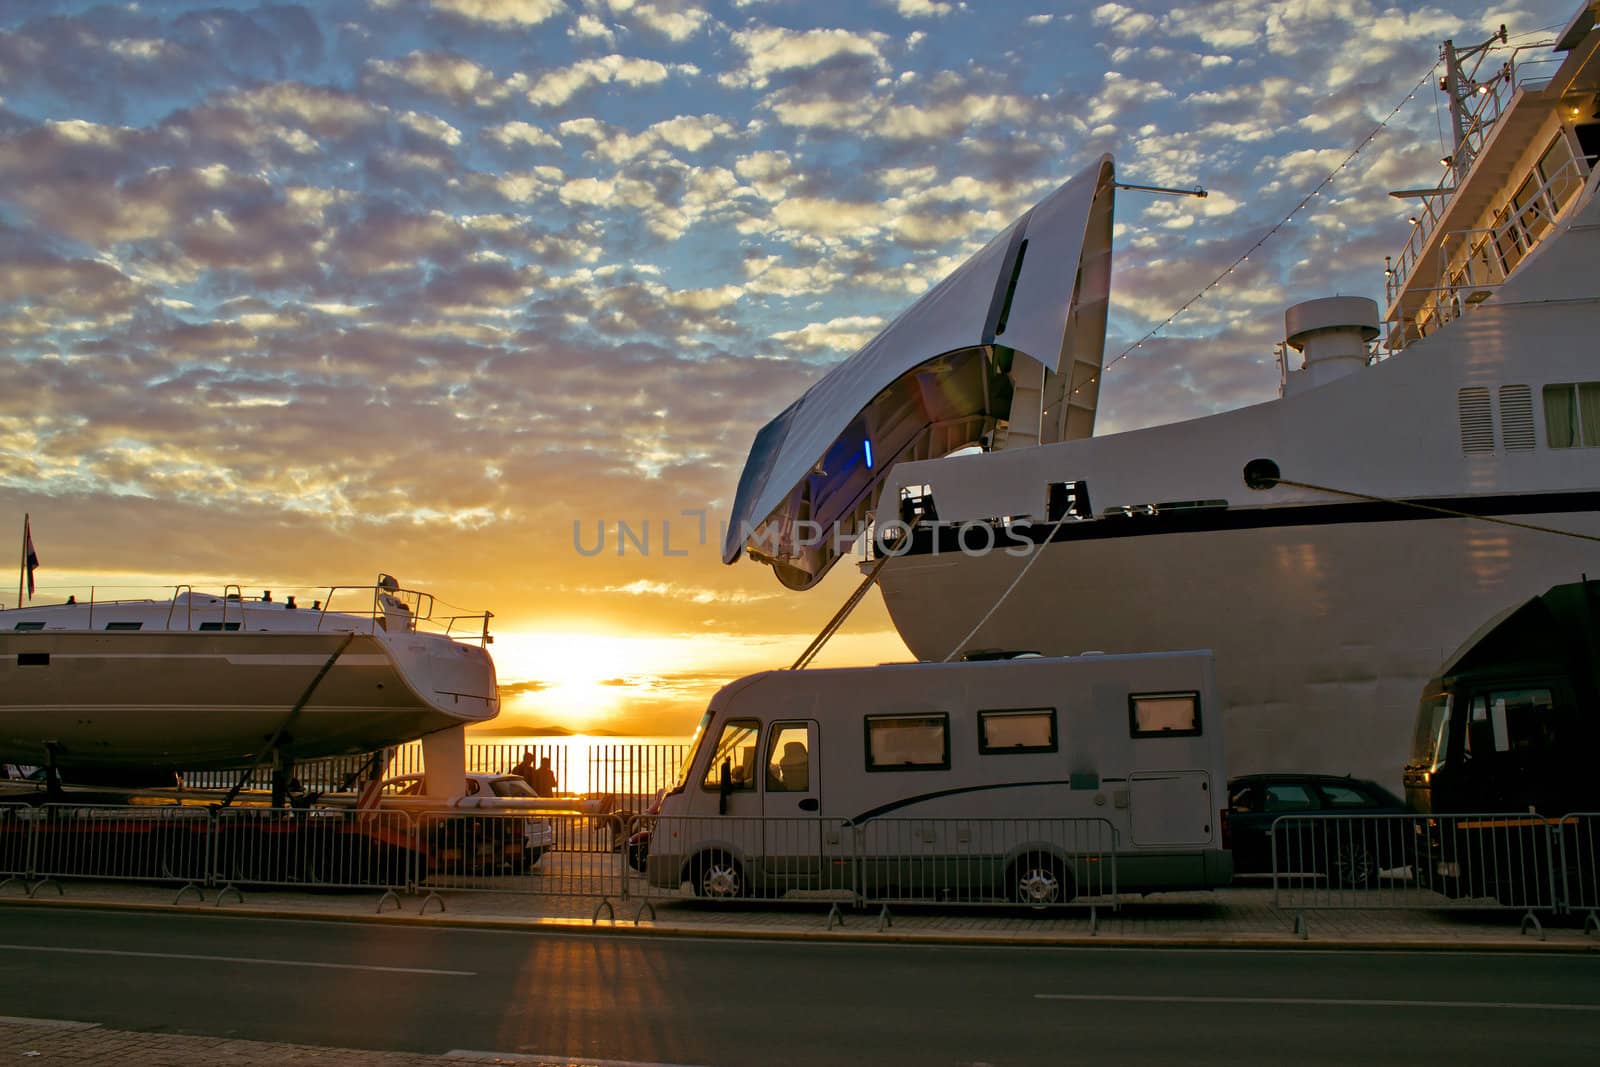 Vehicles waiting on ferry boat docks at sunset, Zadar, Croatia